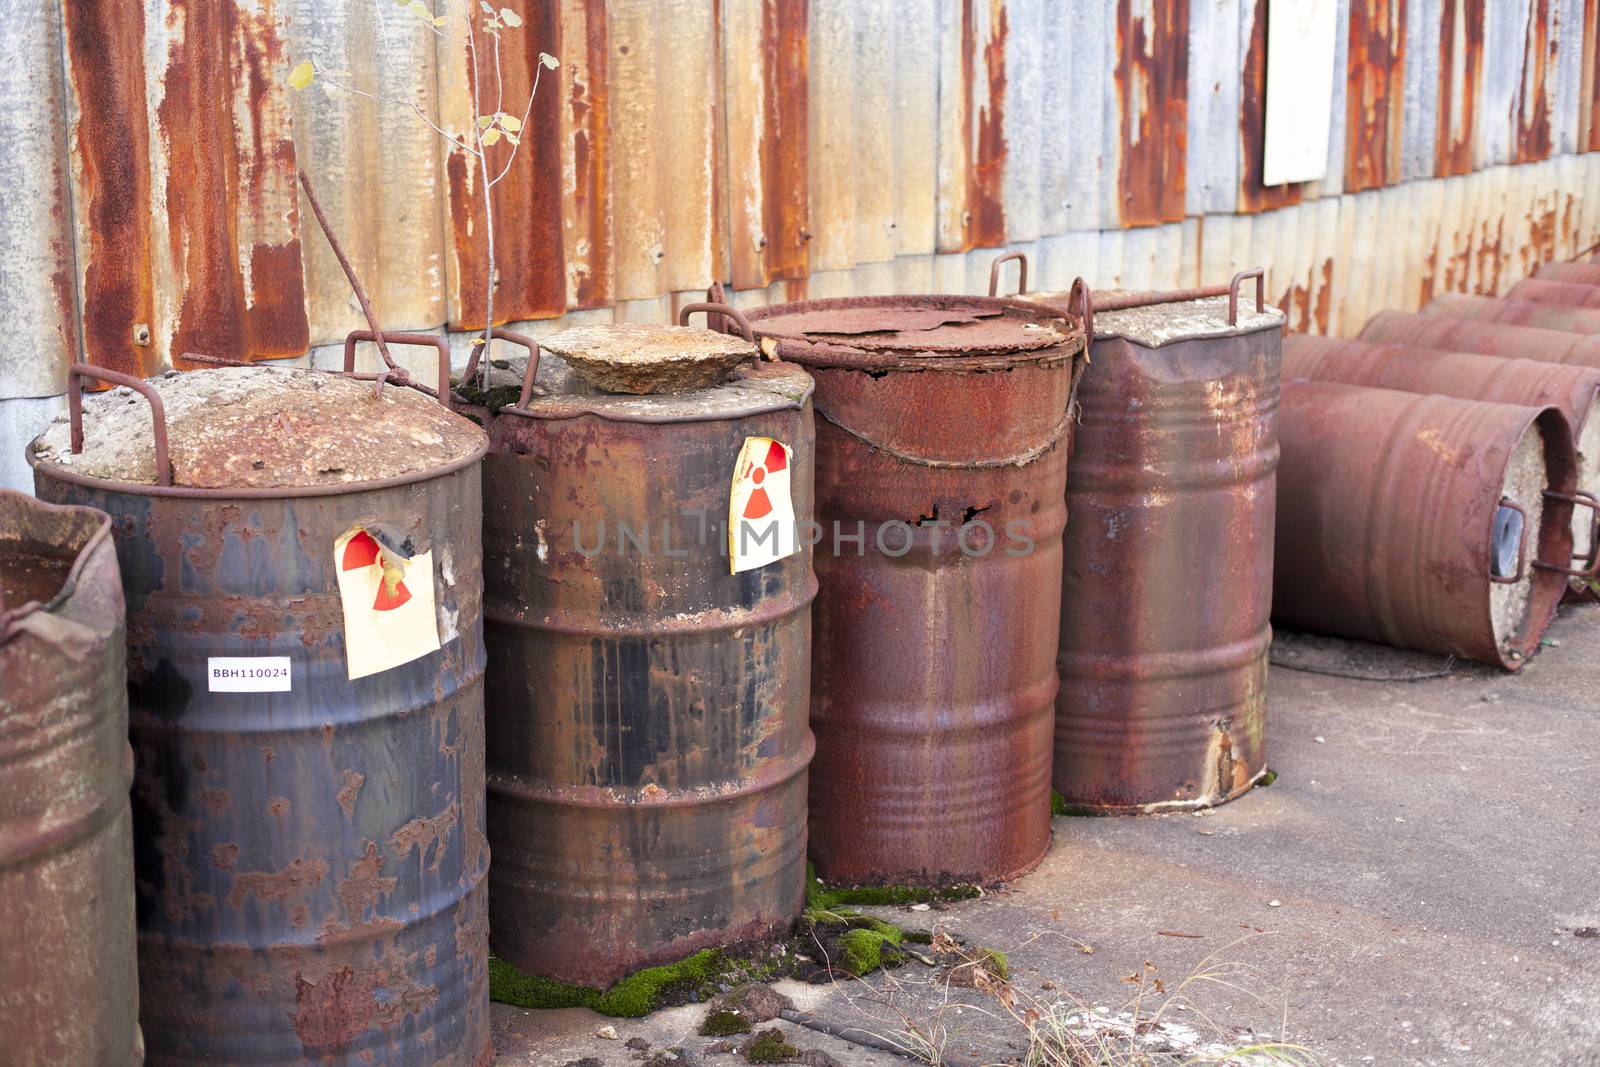 Rusty barrels with radioactive waste disposal